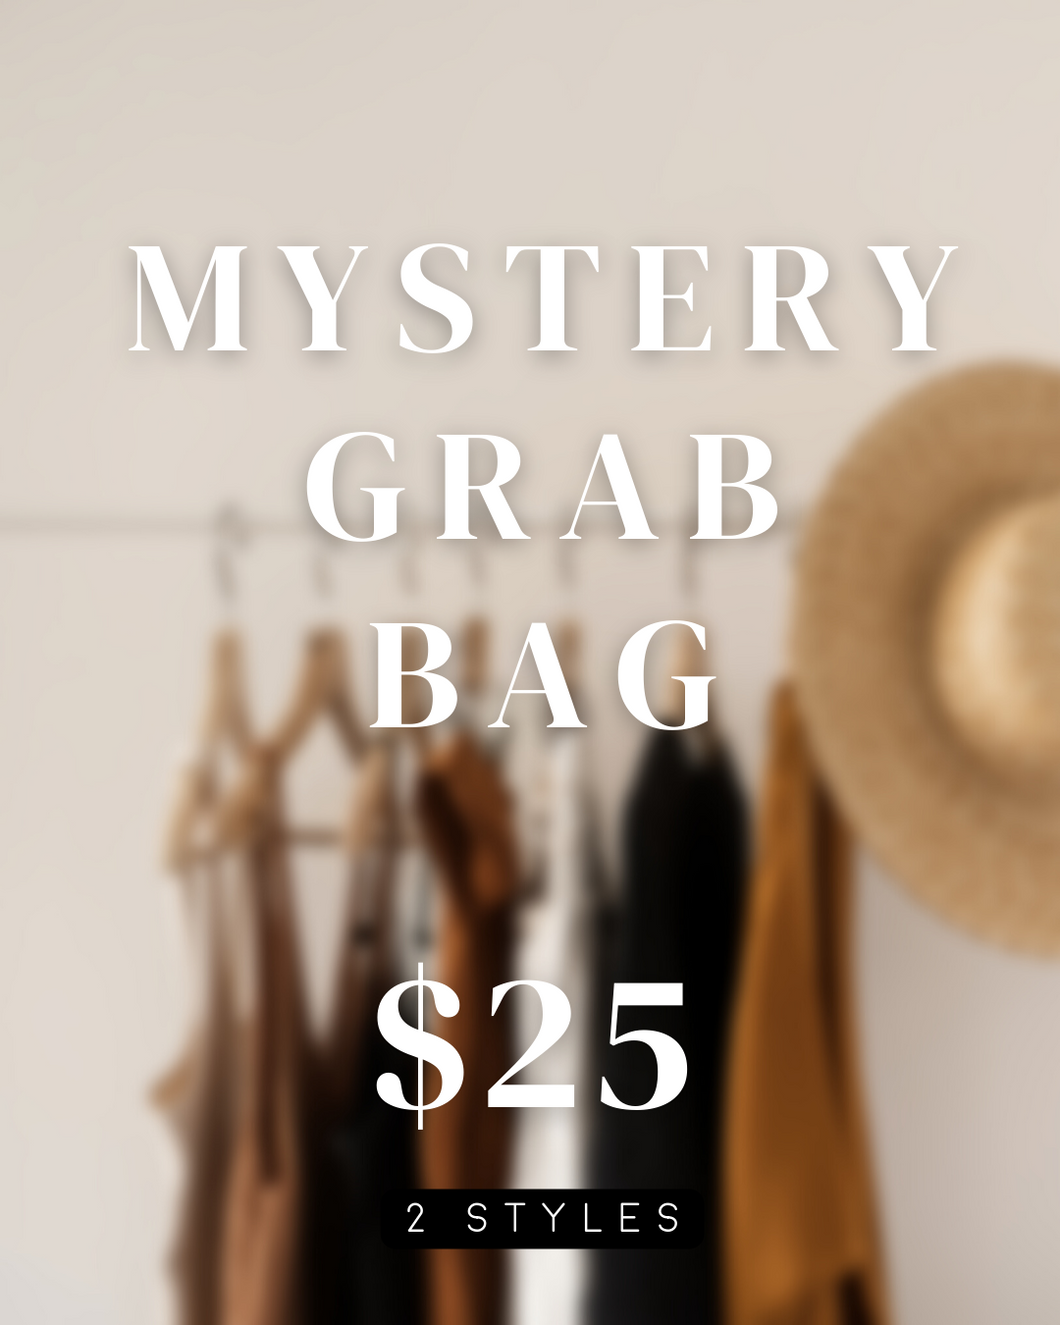 $25 Mystery Grab Bag!